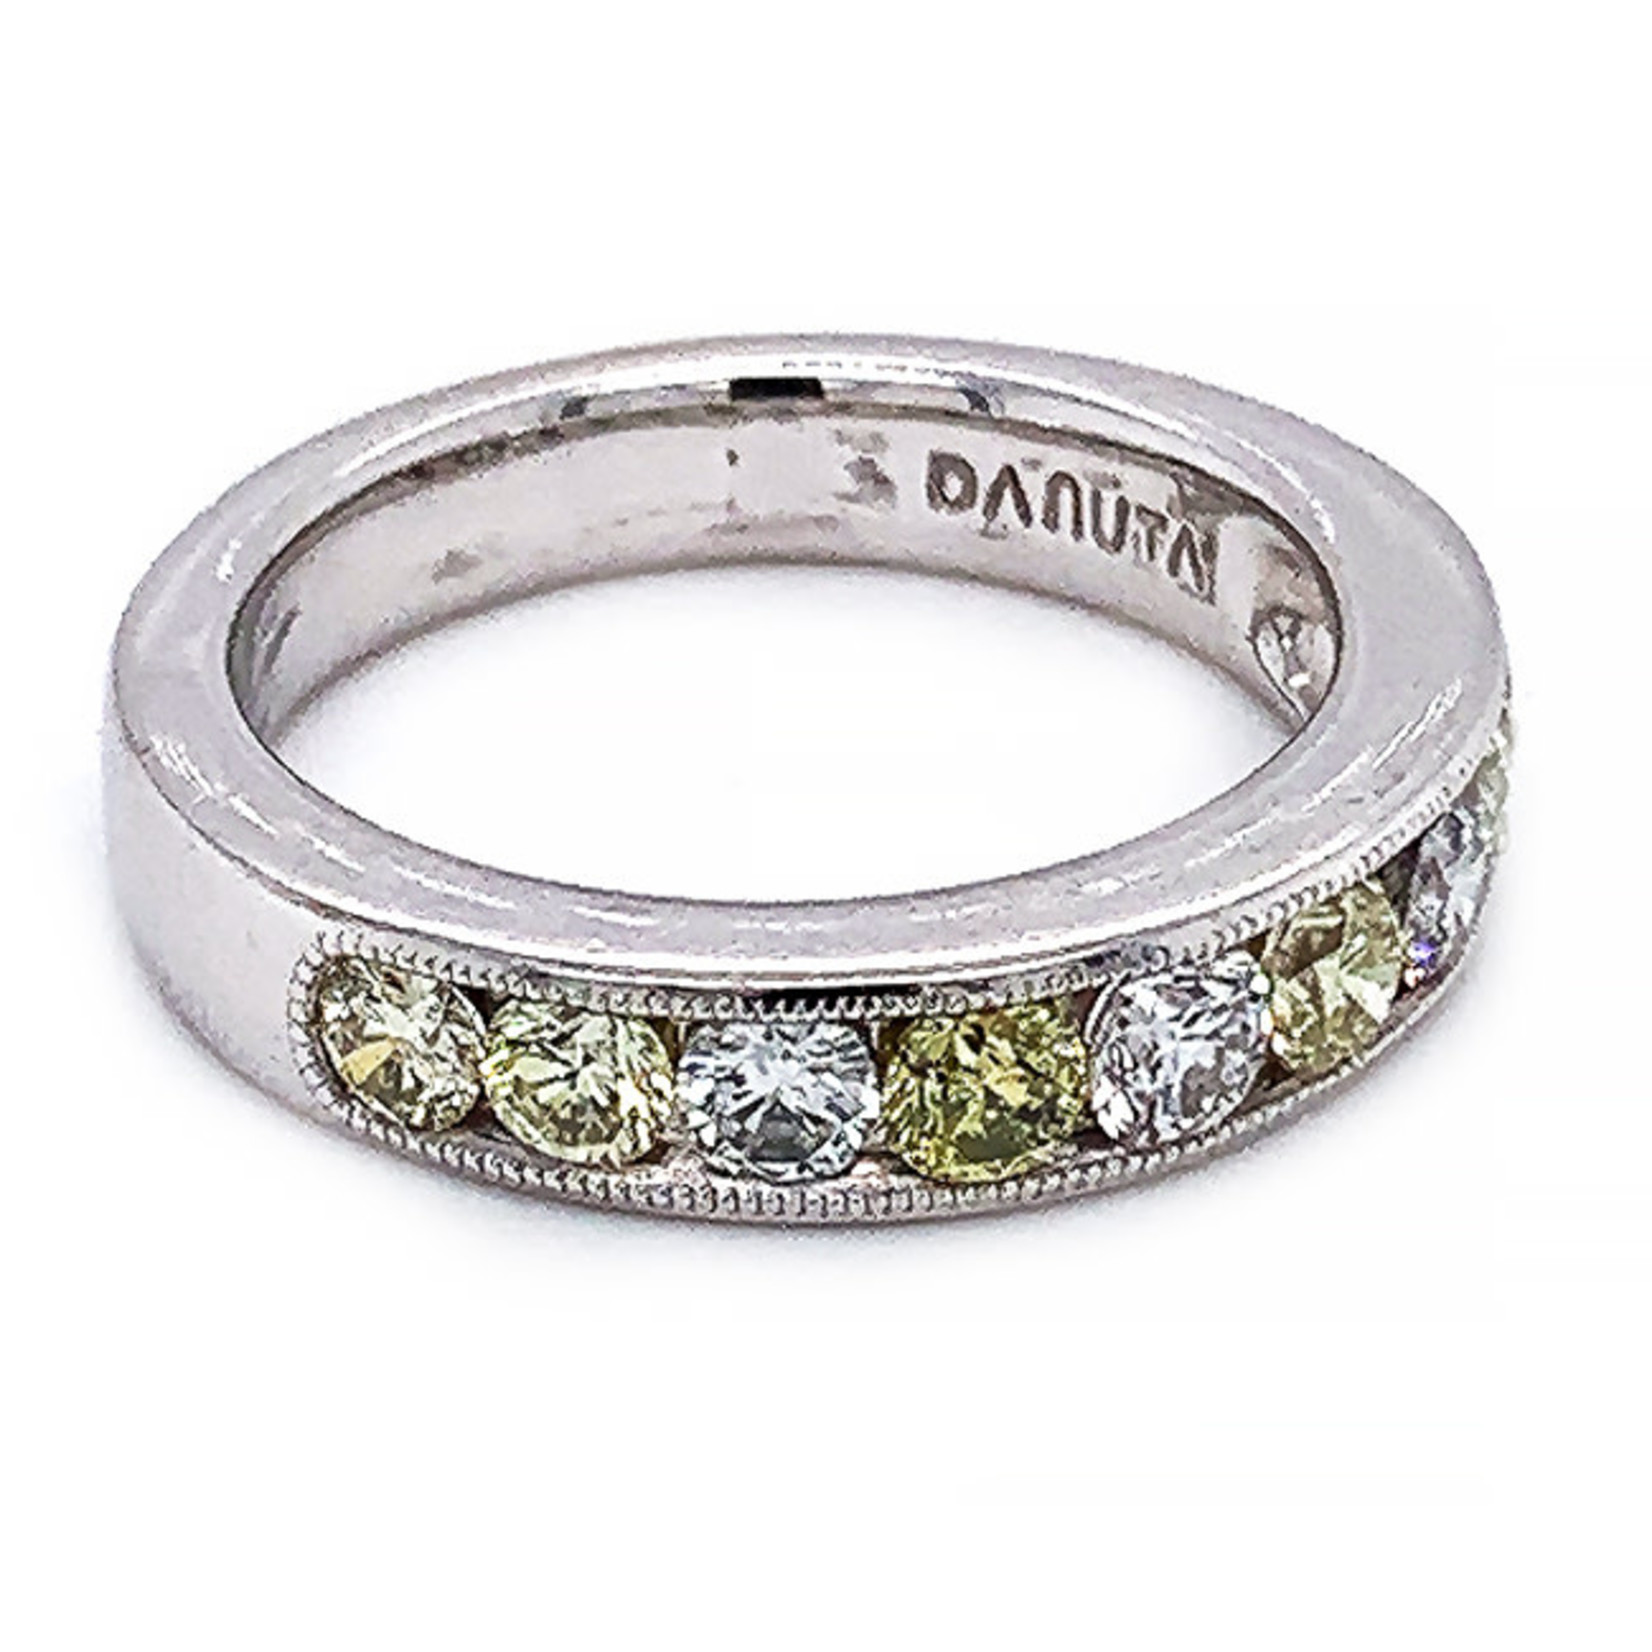 Jewelry By Danuta - Platinum Drawer Natural Color Diamond Platinum Ring 1 ct GYPW Dai